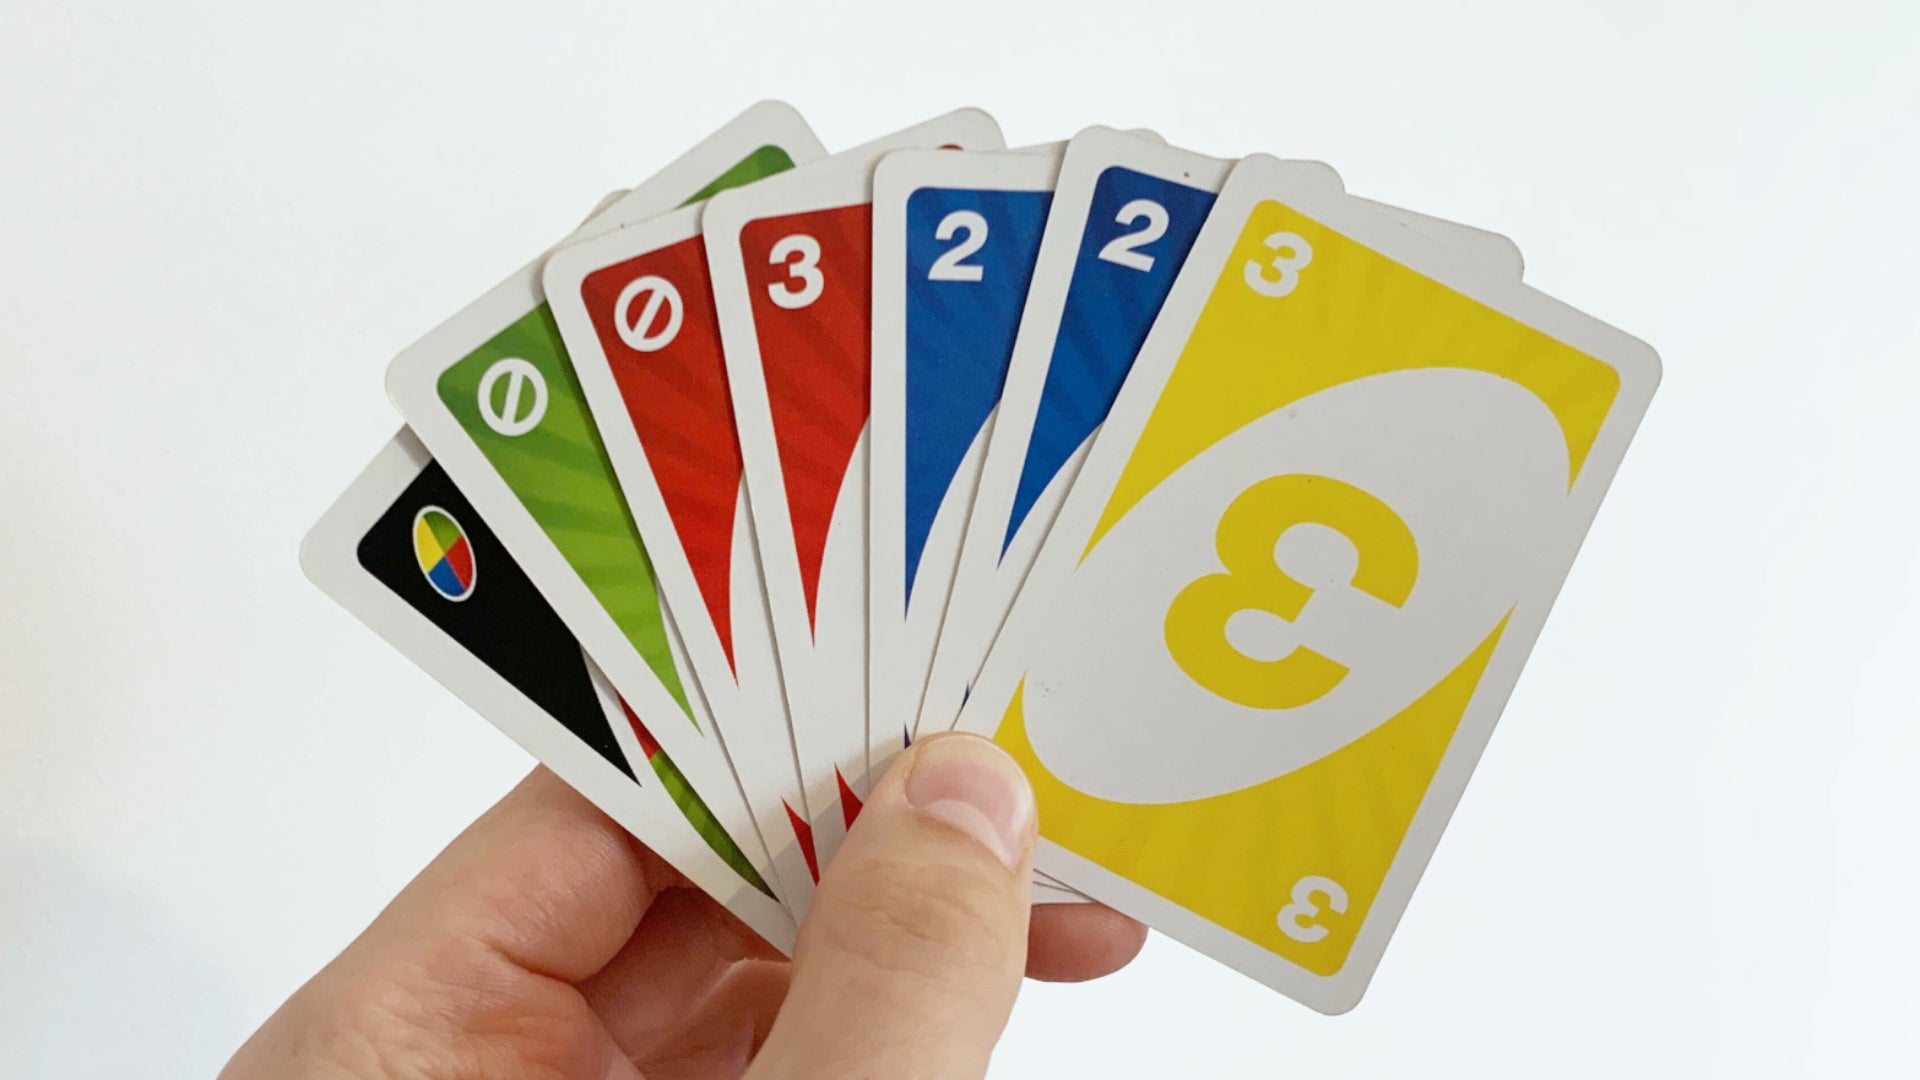 Drunk Svg, Uno Svg, Playing Game Card Svg, Card Game Svg, Pl - Inspire  Uplift